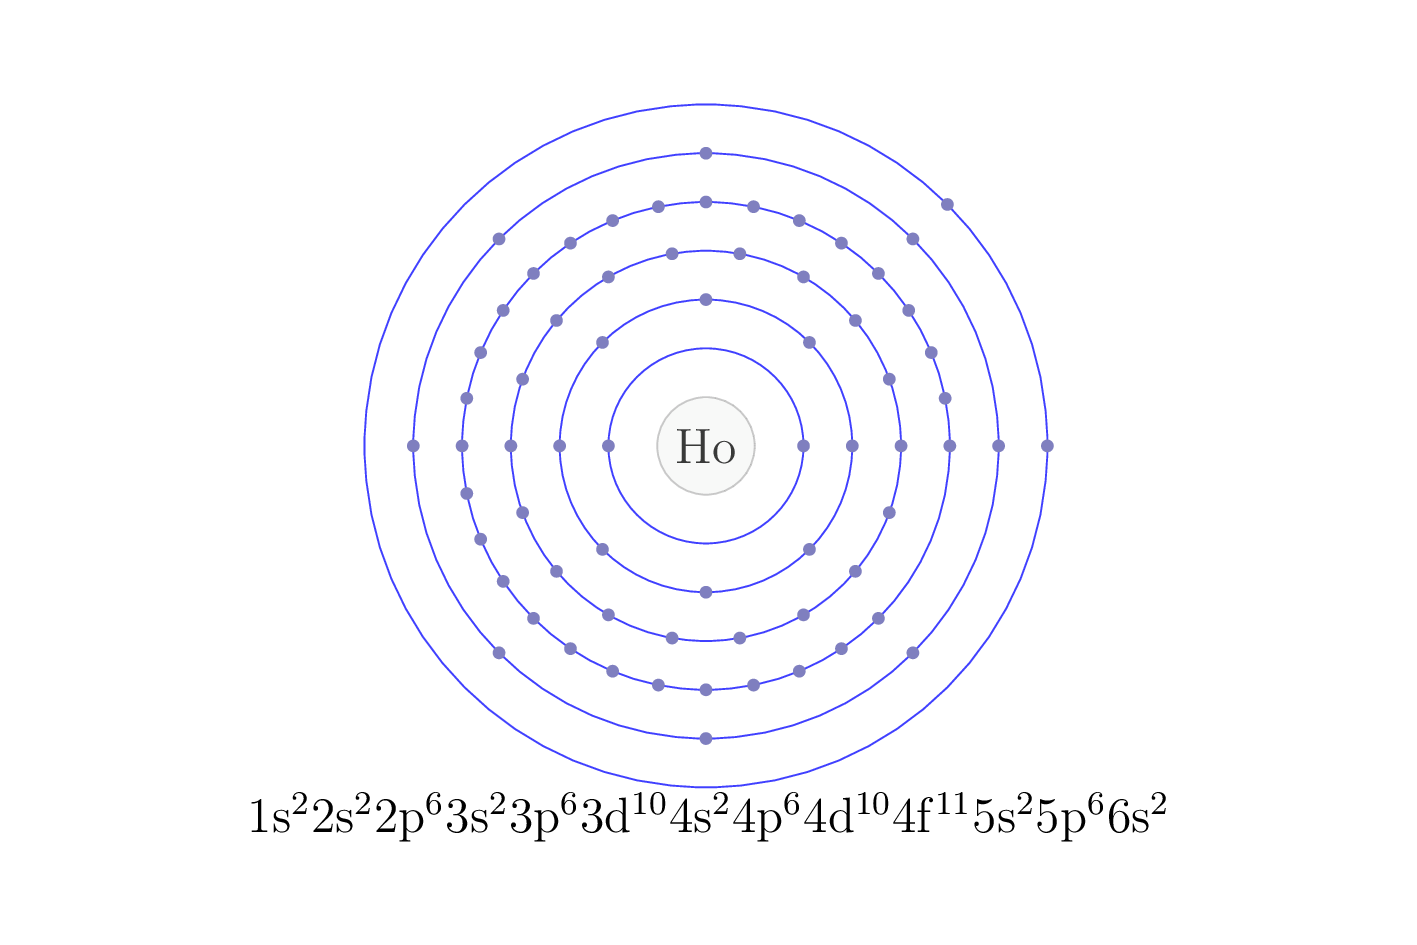 electron configuration of element Ho